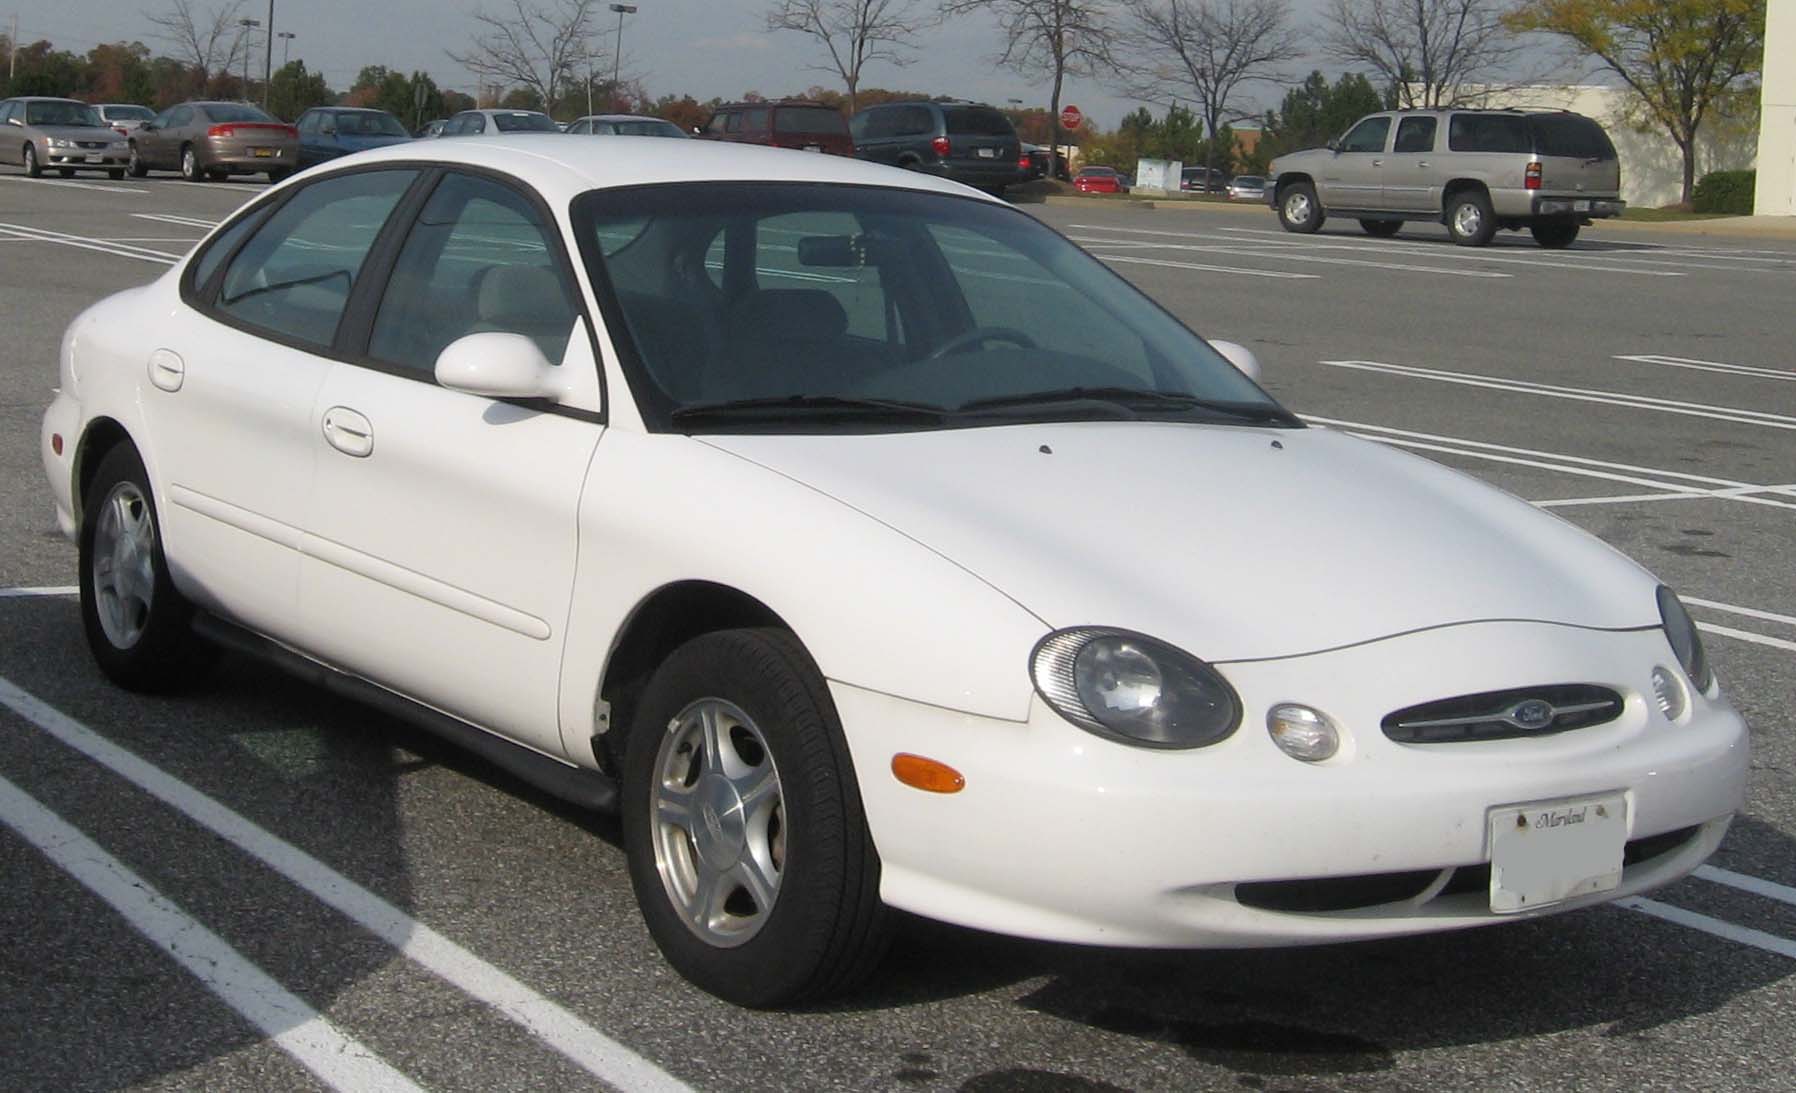 File:1998-99 Ford Taurus Sedan.jpg - Wikimedia Commons